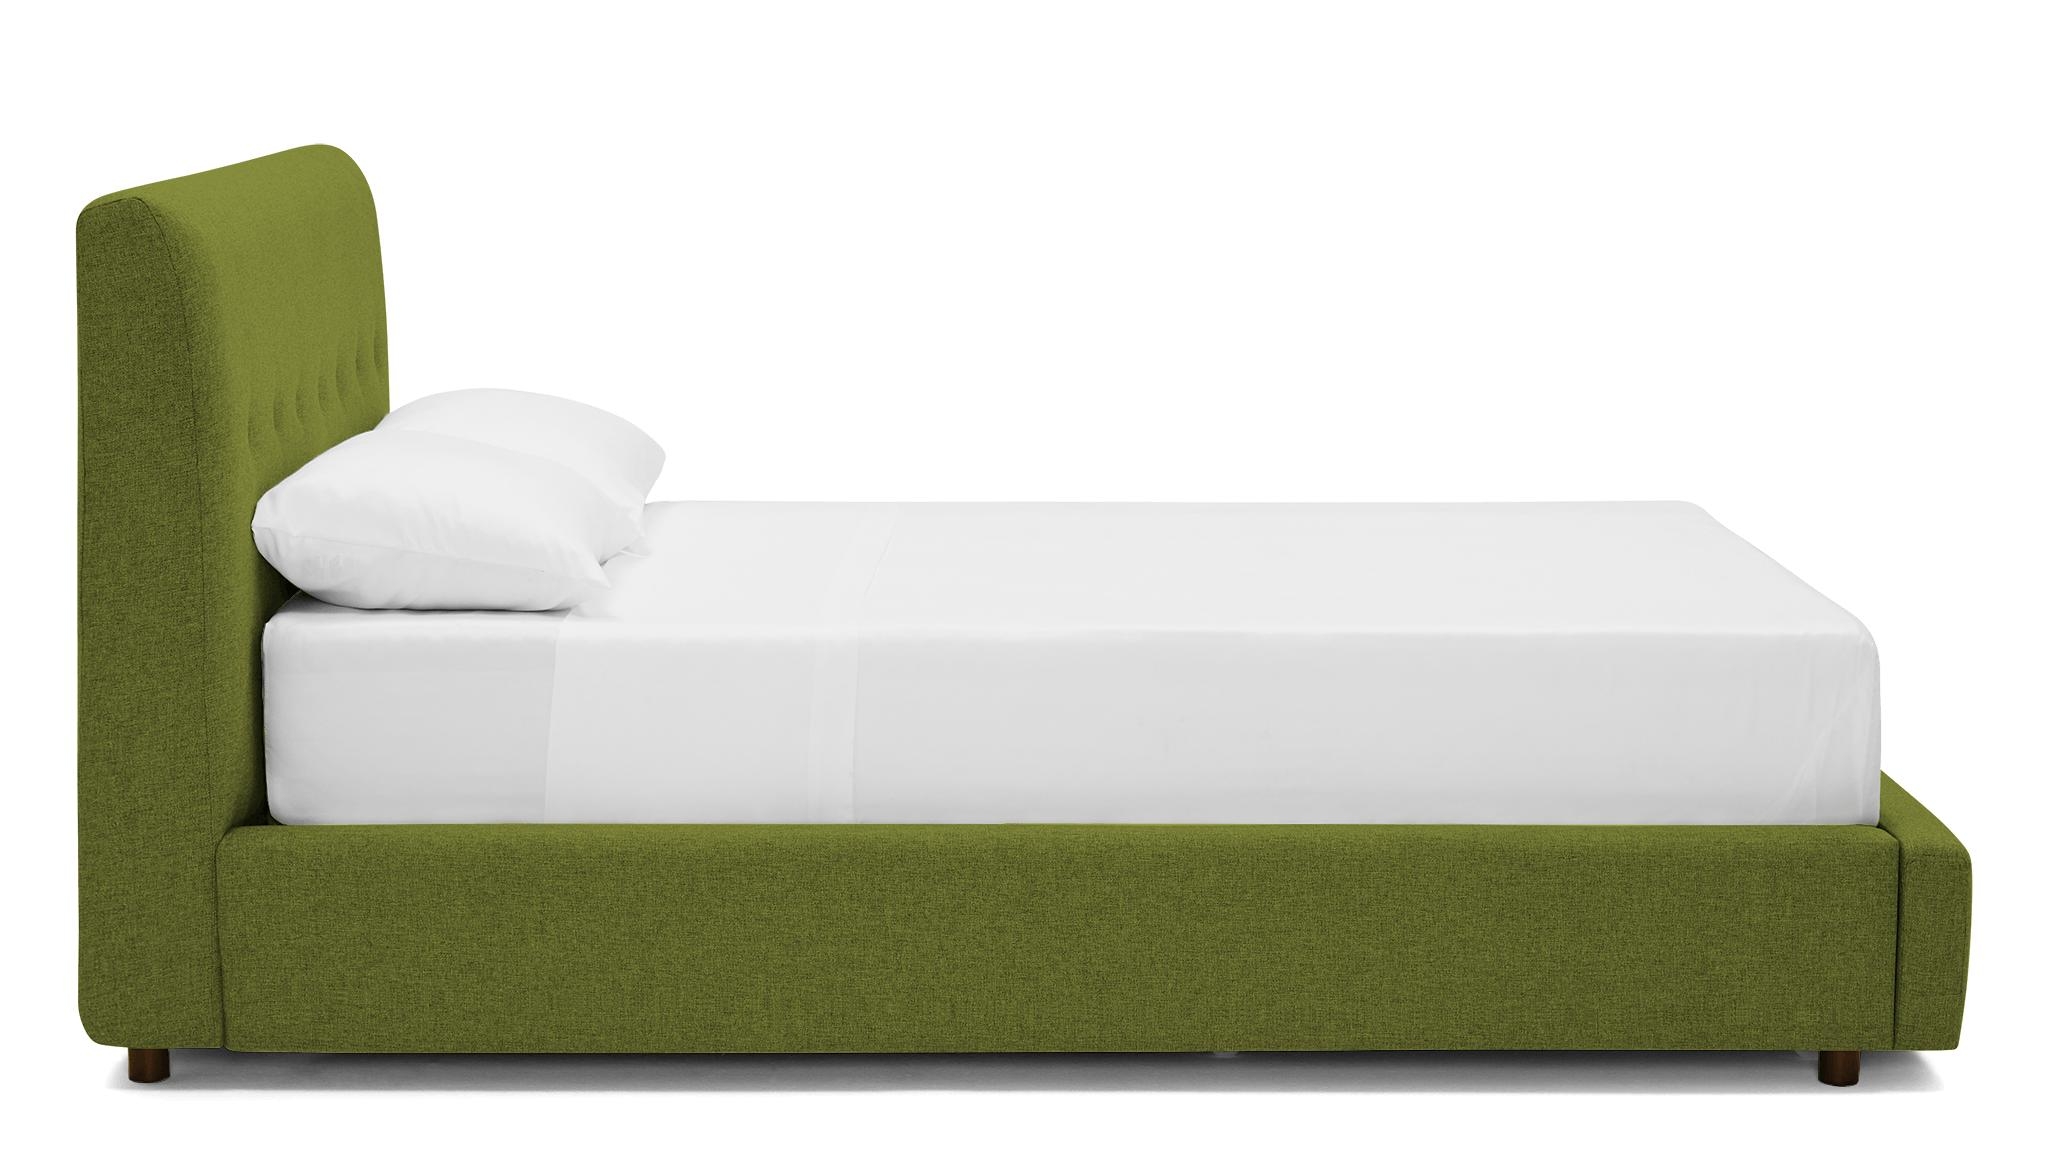 Green Alvin Mid Century Modern Storage Bed - Royale Apple - Mocha - Queen - Image 2